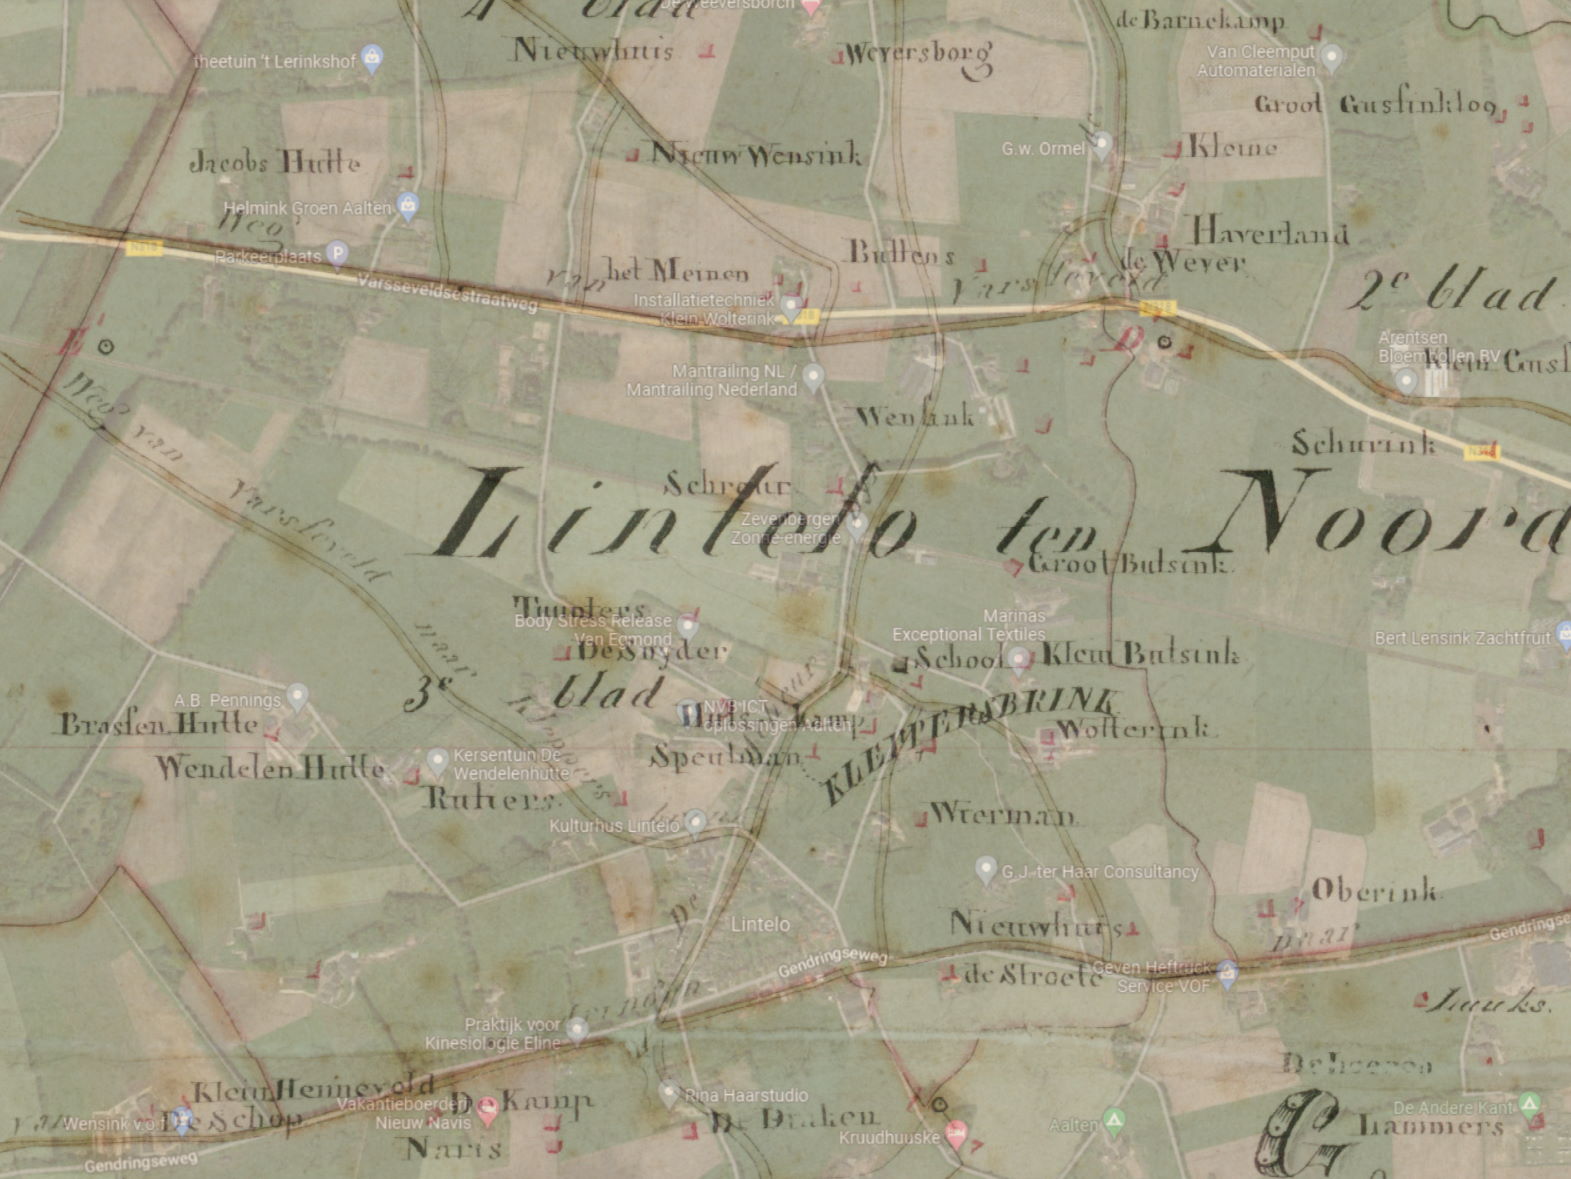 Kleppersbrink, Lintelo - Kad. kaart 1811-1832 op Google Maps